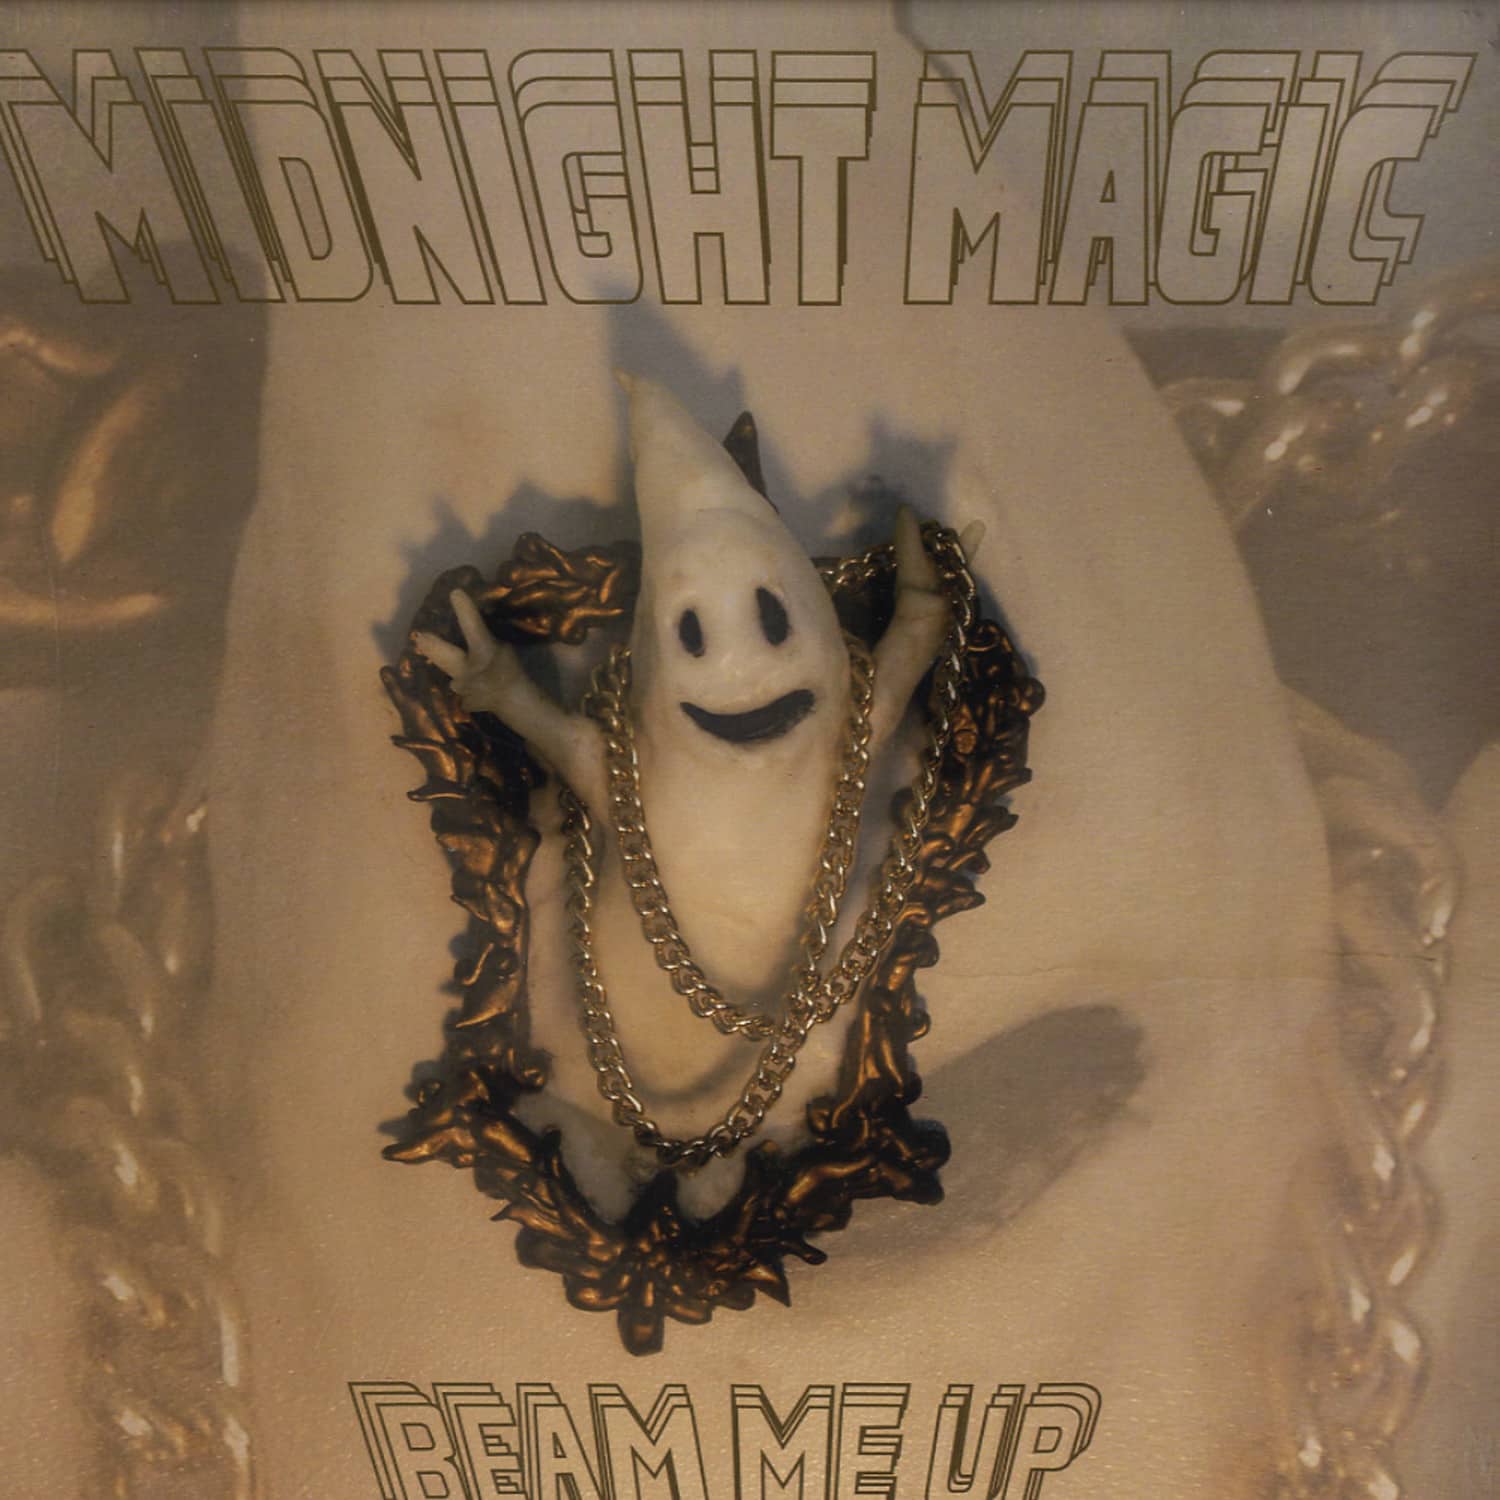 Midnight Magic - BEAM ME UP 